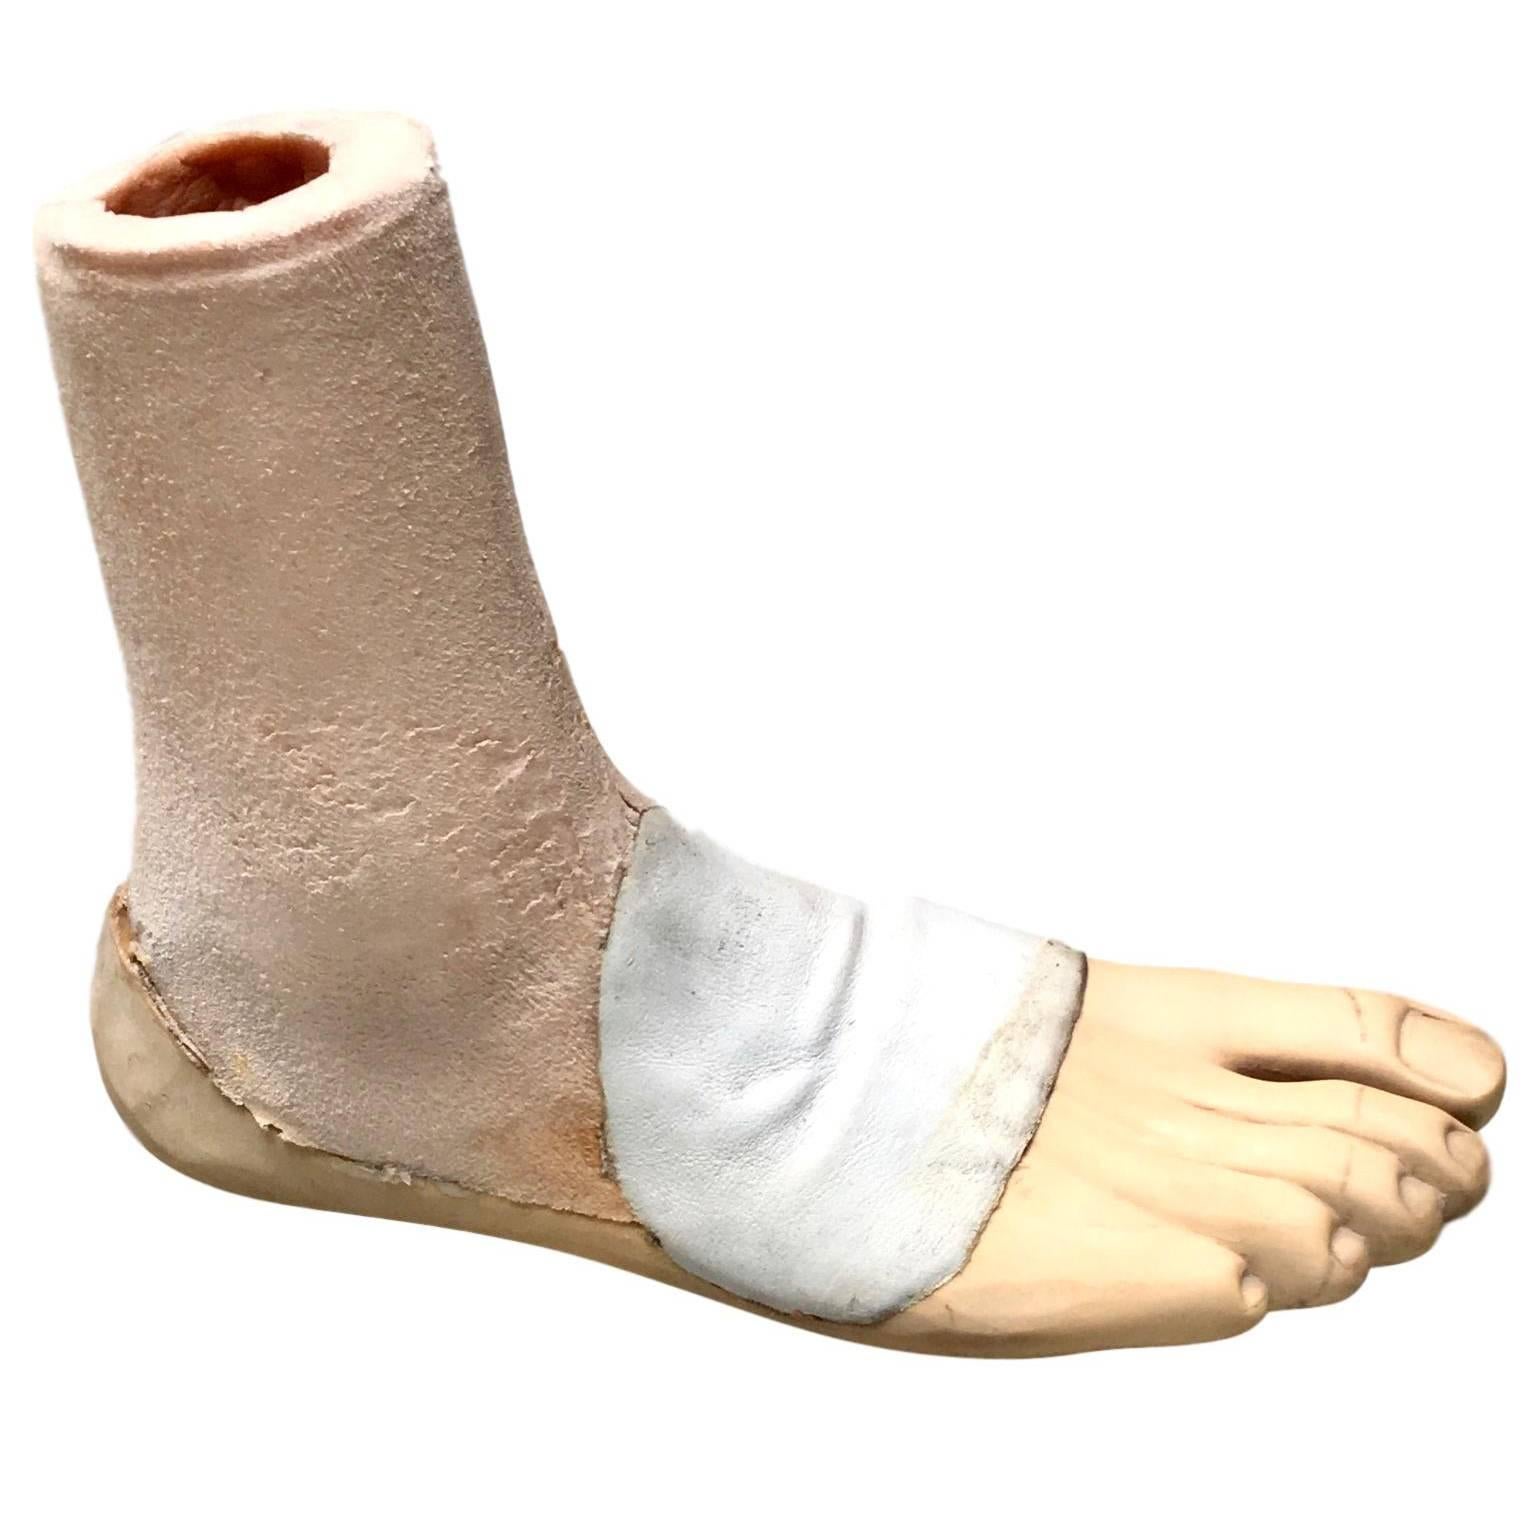 Vintage Prosthetic Foot